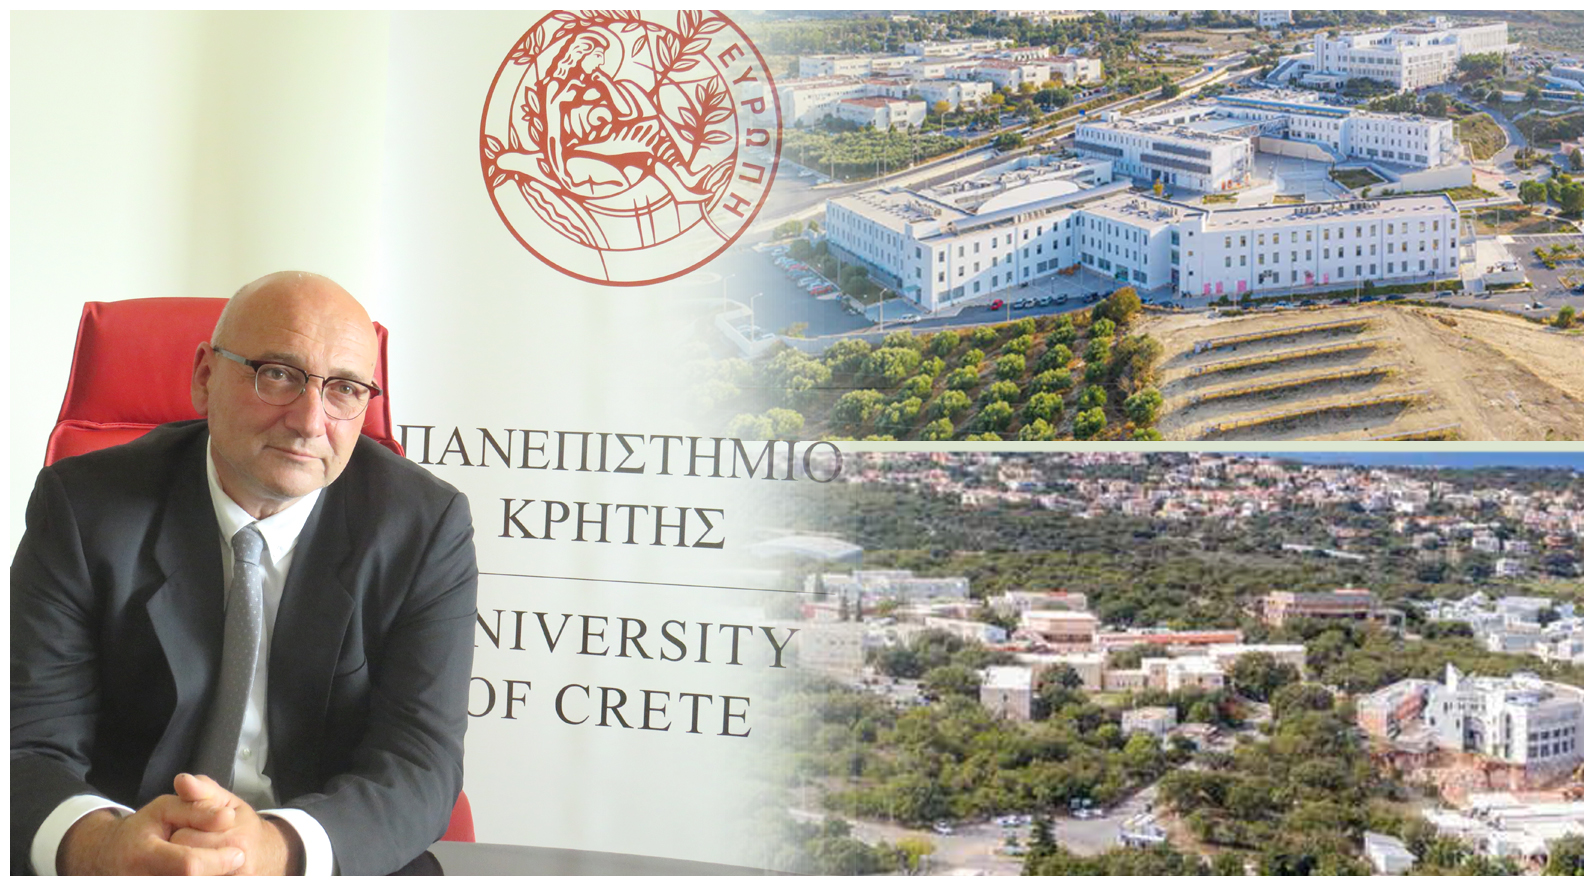 university of crete panepistimio kritis prytanis pritanis πανεπιστήμιο κρήτης πρύτανης καθηγητής κοντάκης kontakis